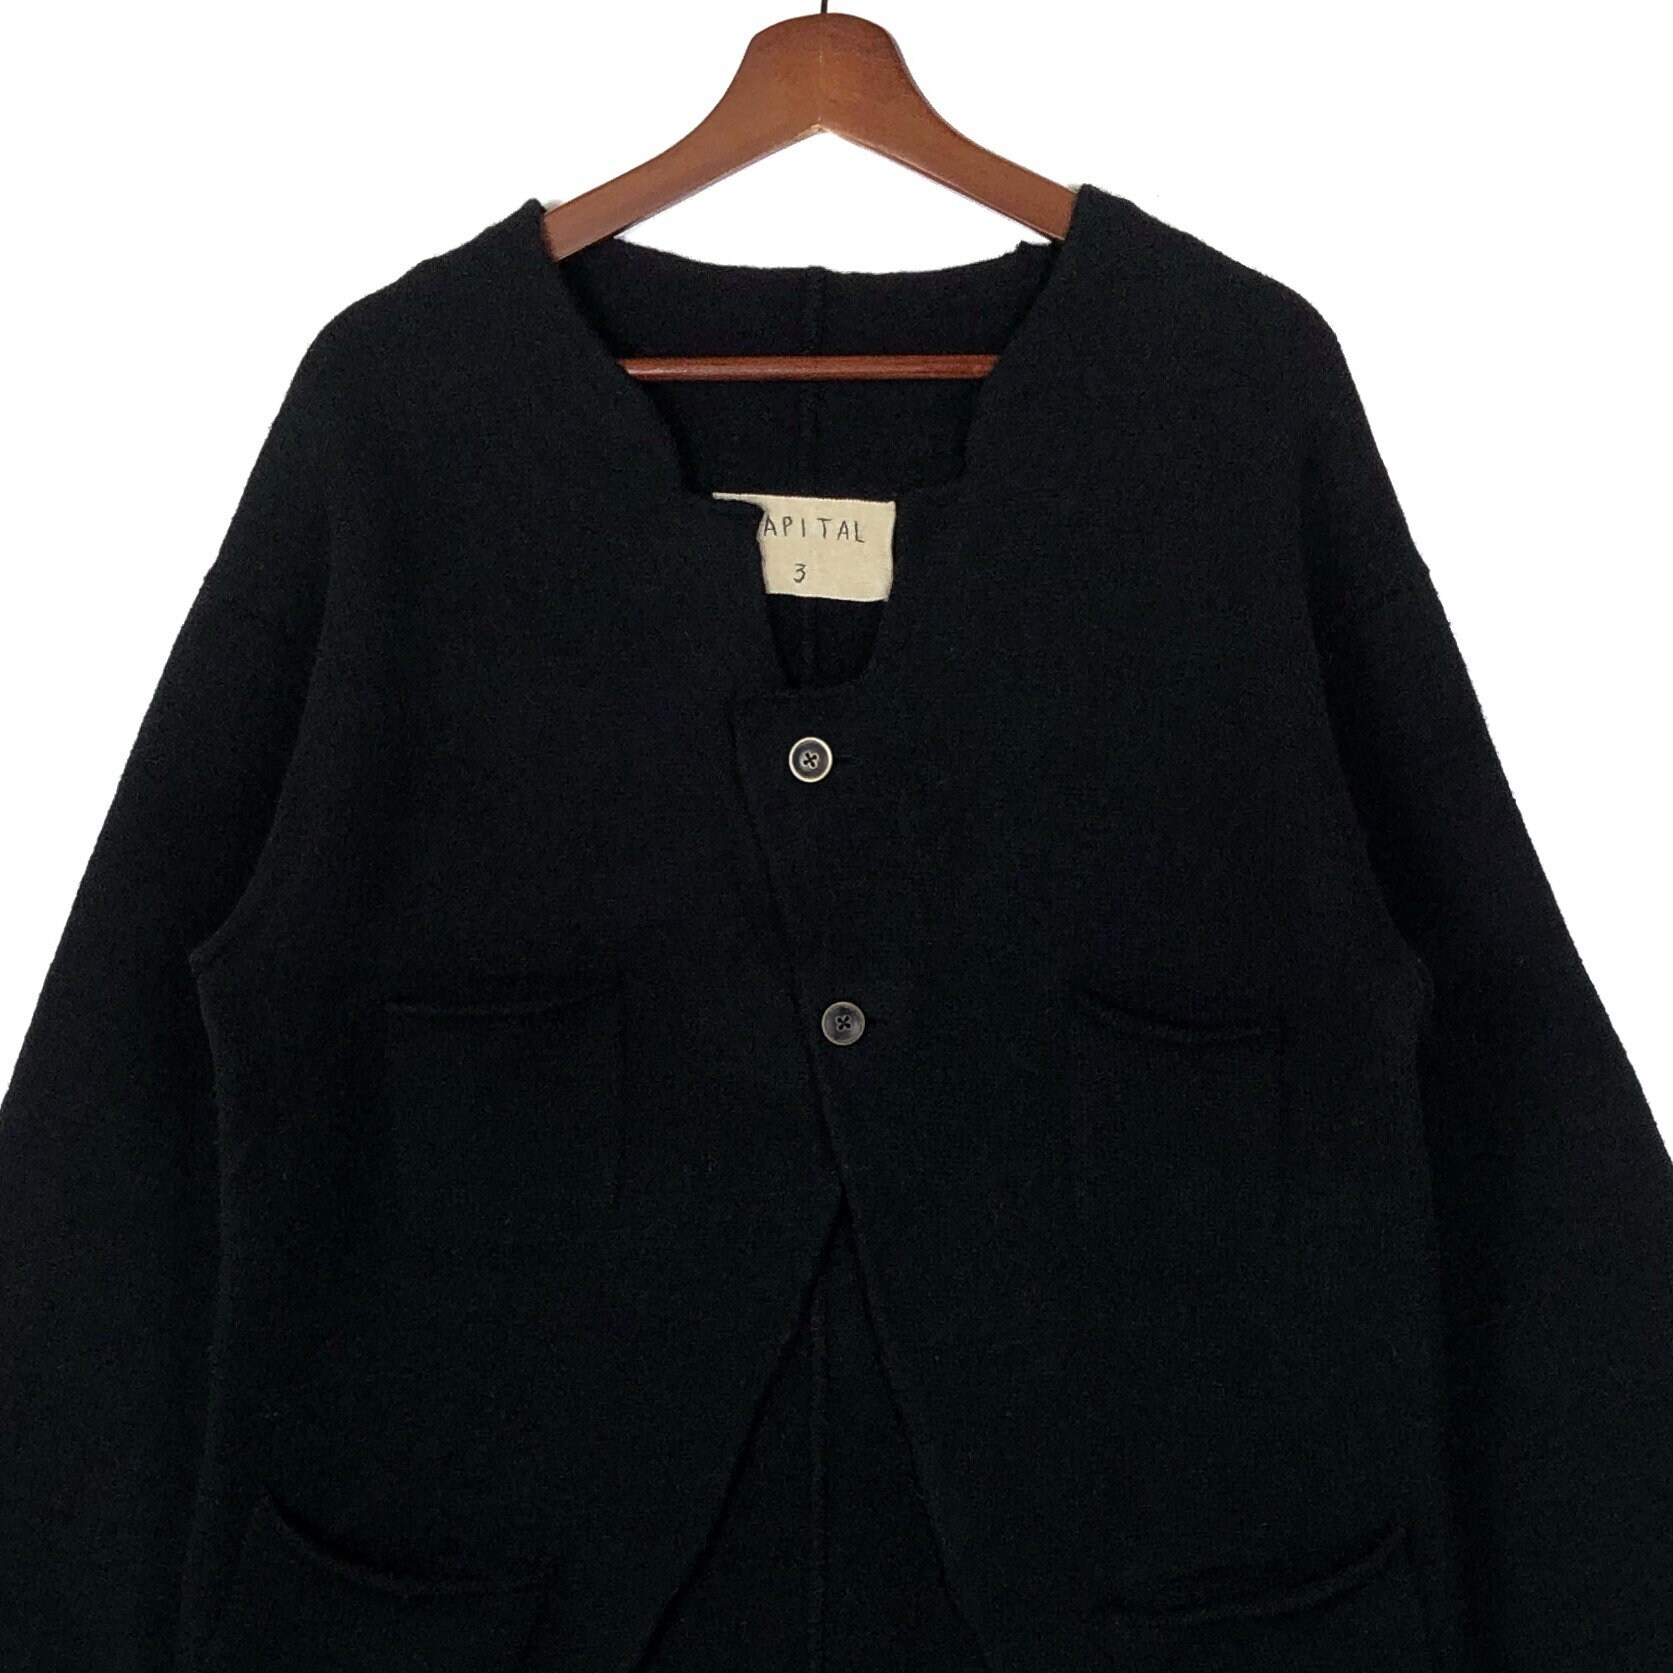 Kapital Swallowtail Wool Coat Jacket by Kapitalglobal Made in - Etsy